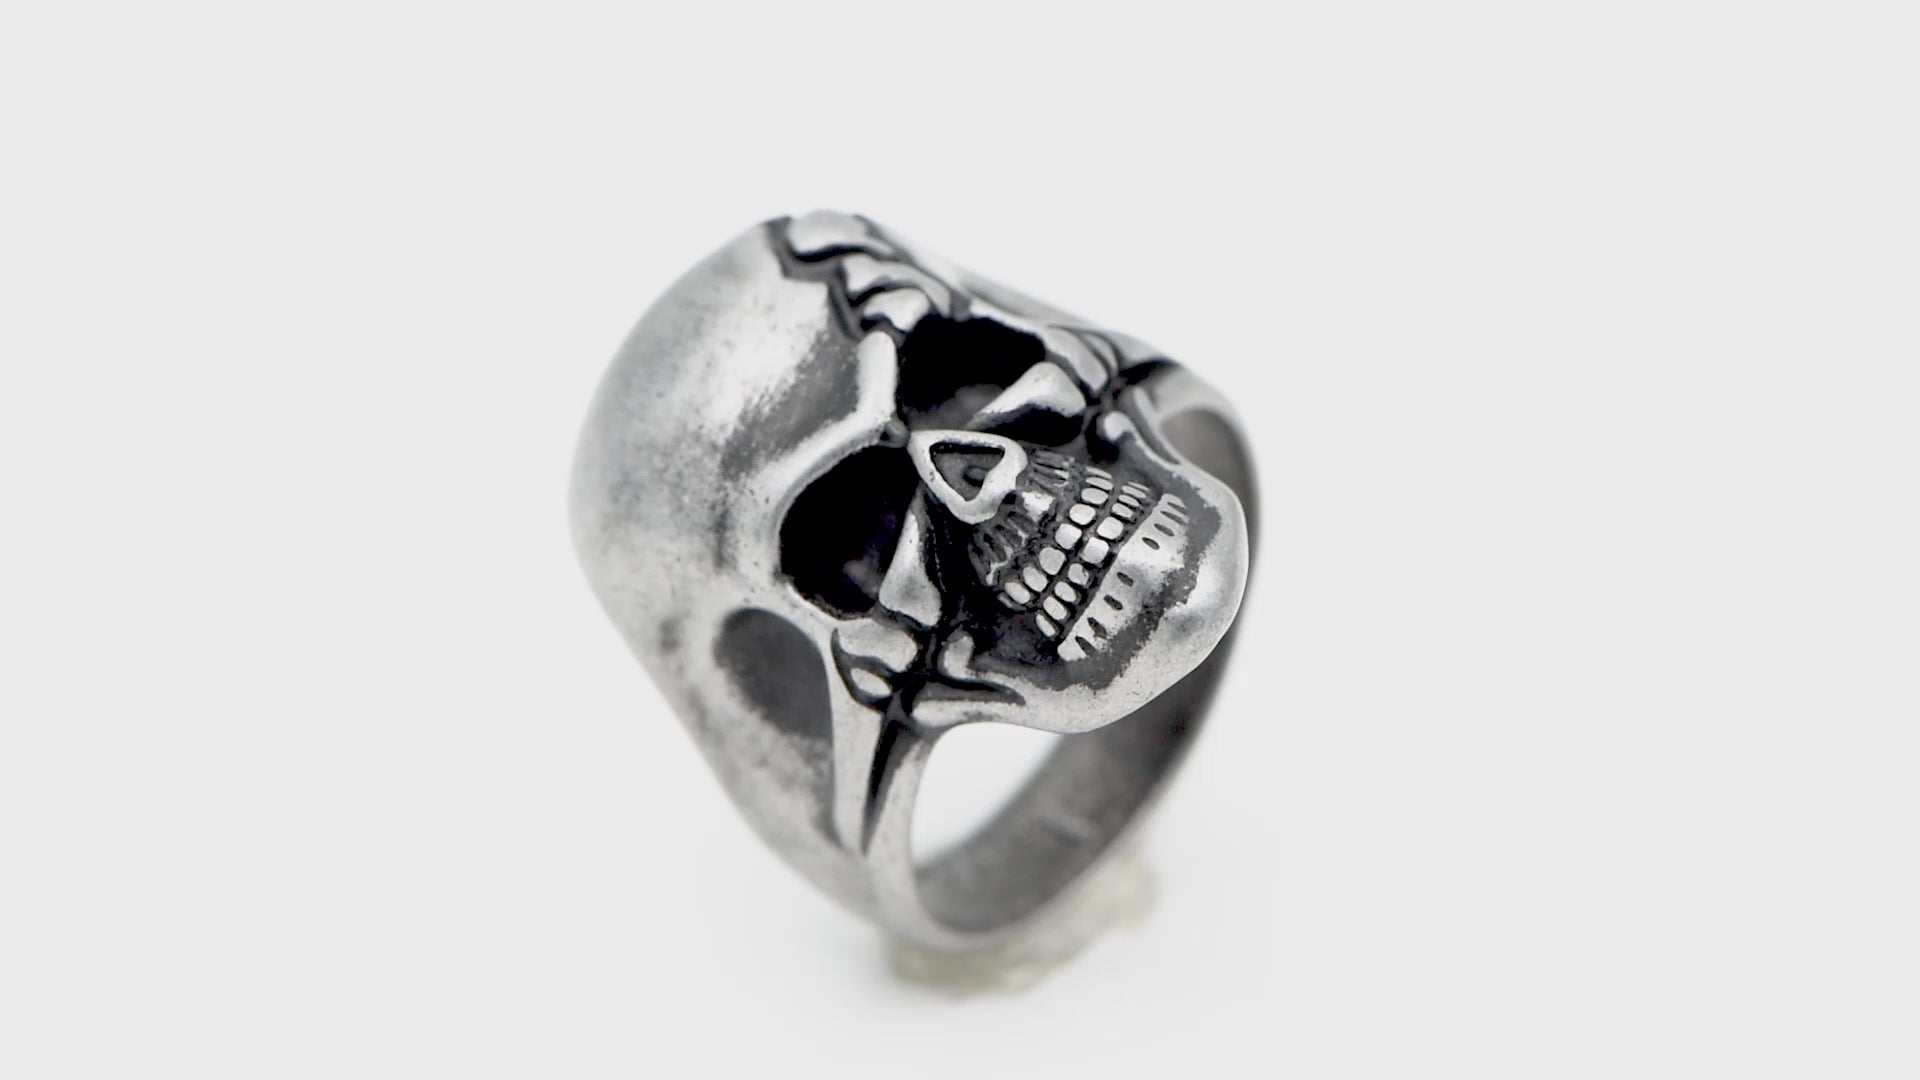 Silver Tone Stainless Steel Antique Finish Gunmetal Cracked Skull Ring